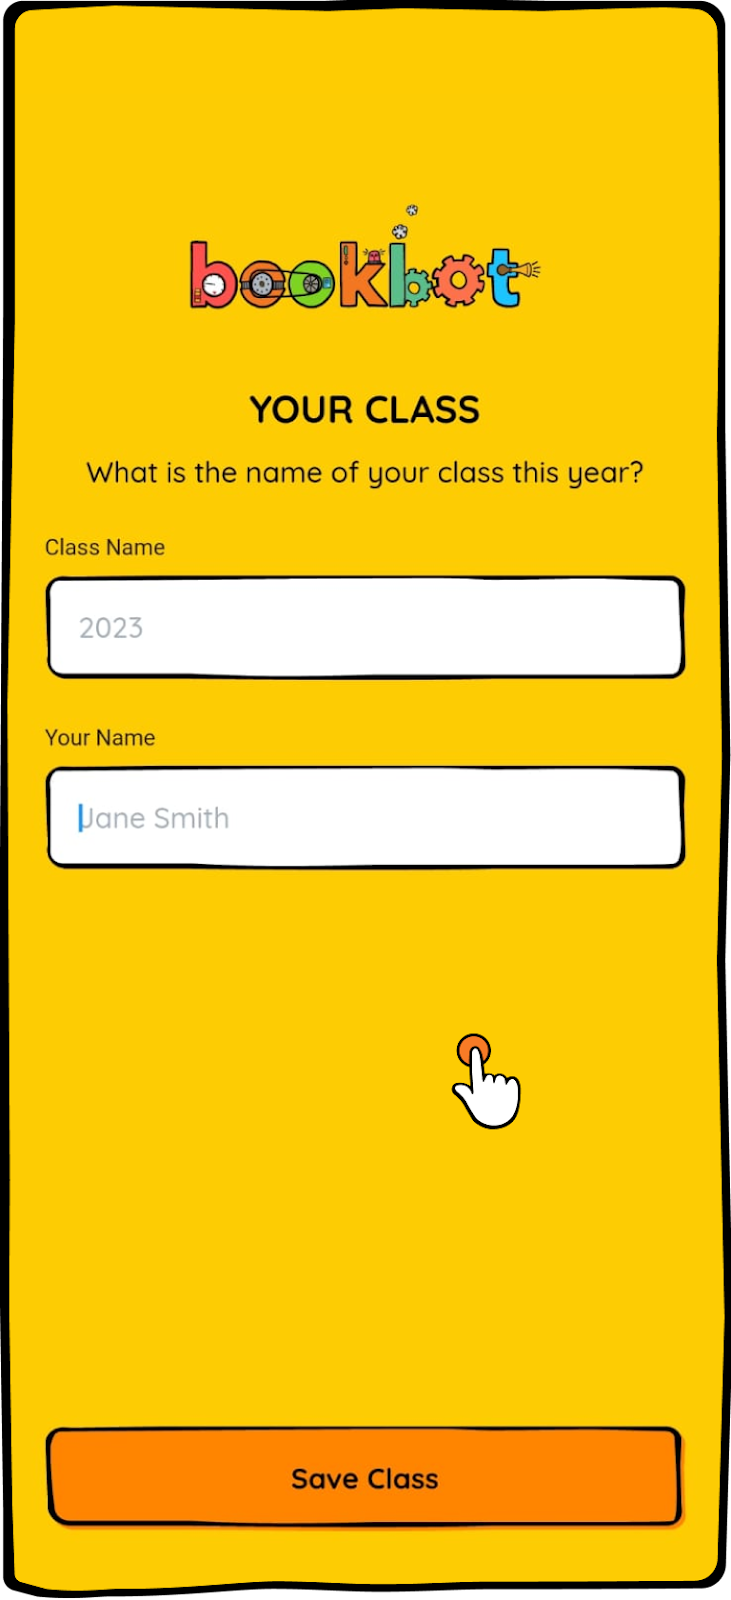 Enter the class name and teacher's name